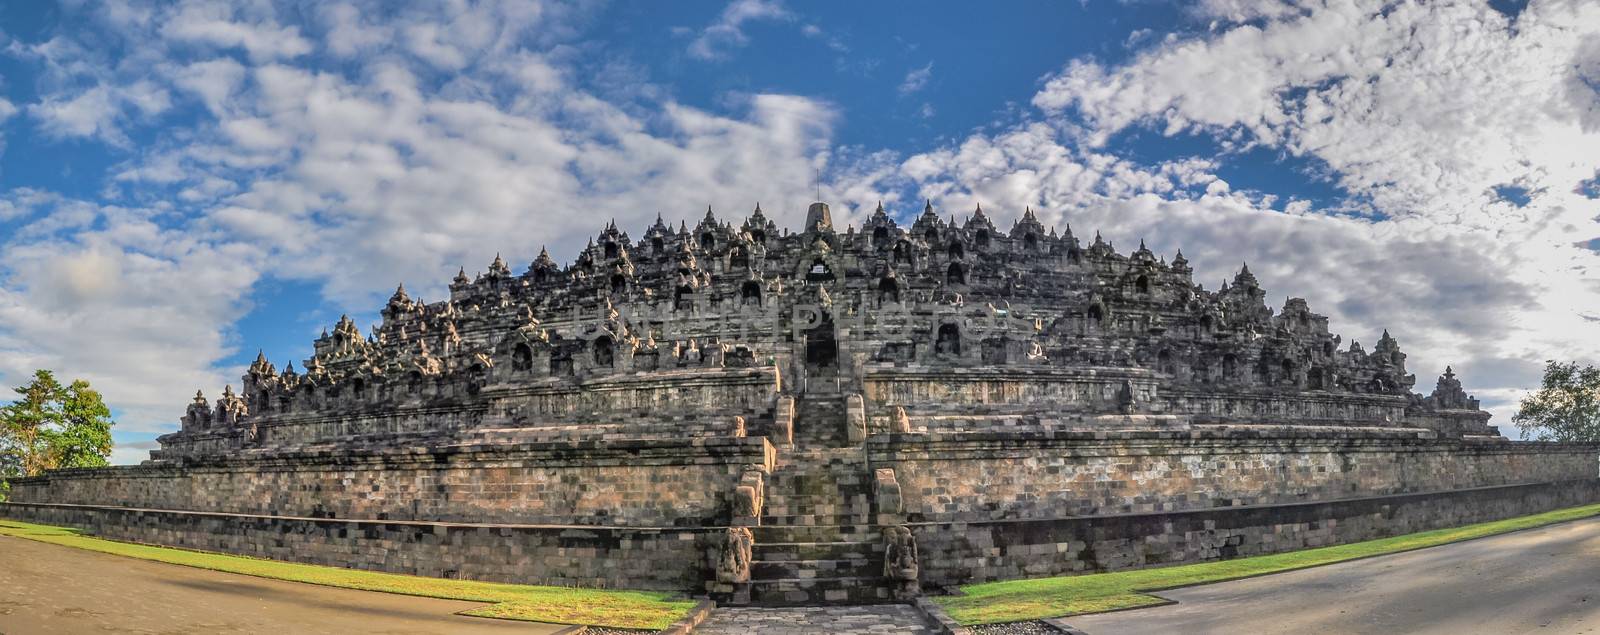 Panorama Buddist temple Borobudur complex in Yogjakarta in Java by weltreisendertj